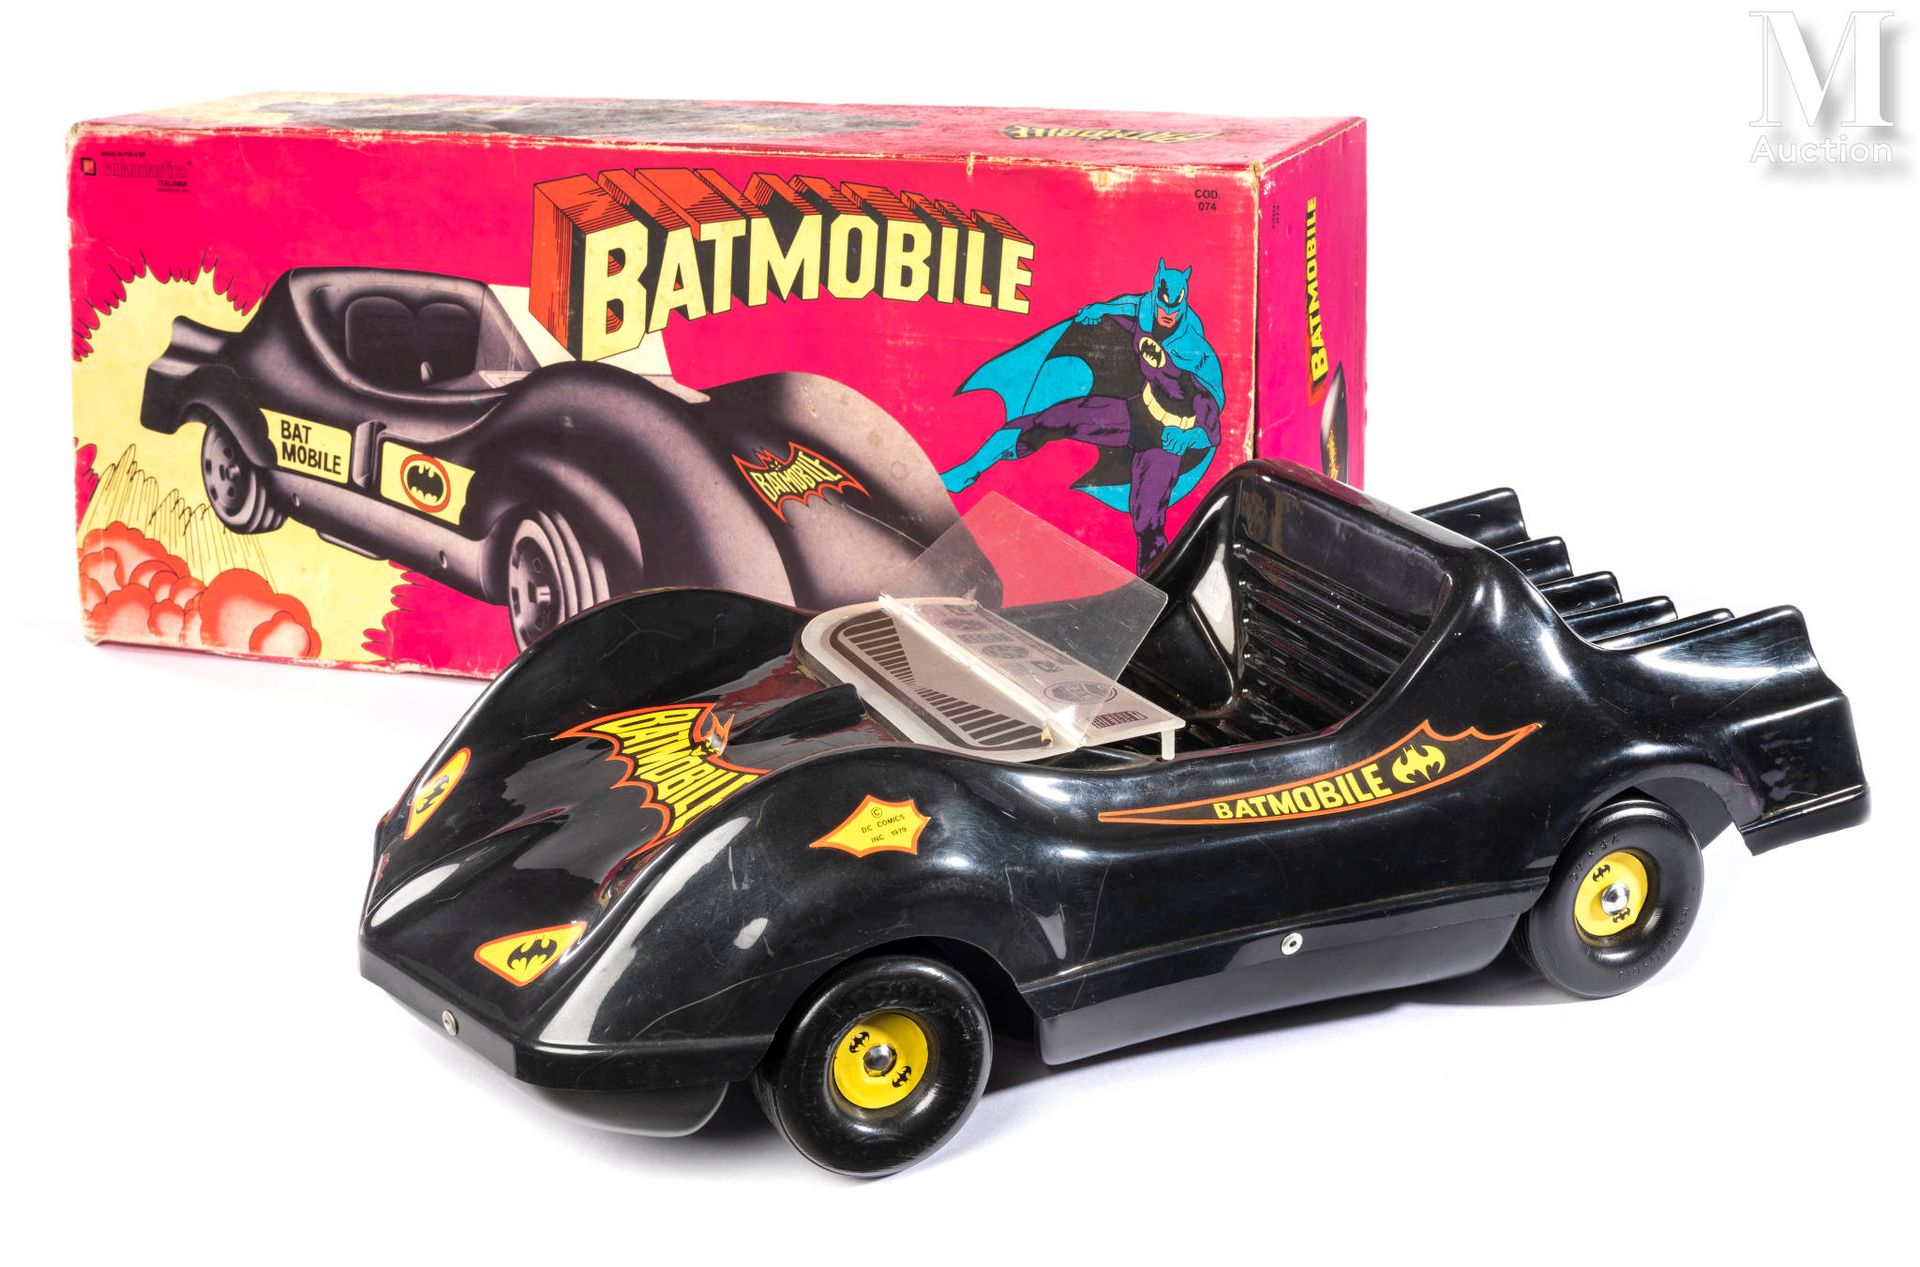 FABIANPLASTICA "Batmobile



1979

车辆在原来的FR盒子里。

(破旧的盒子)